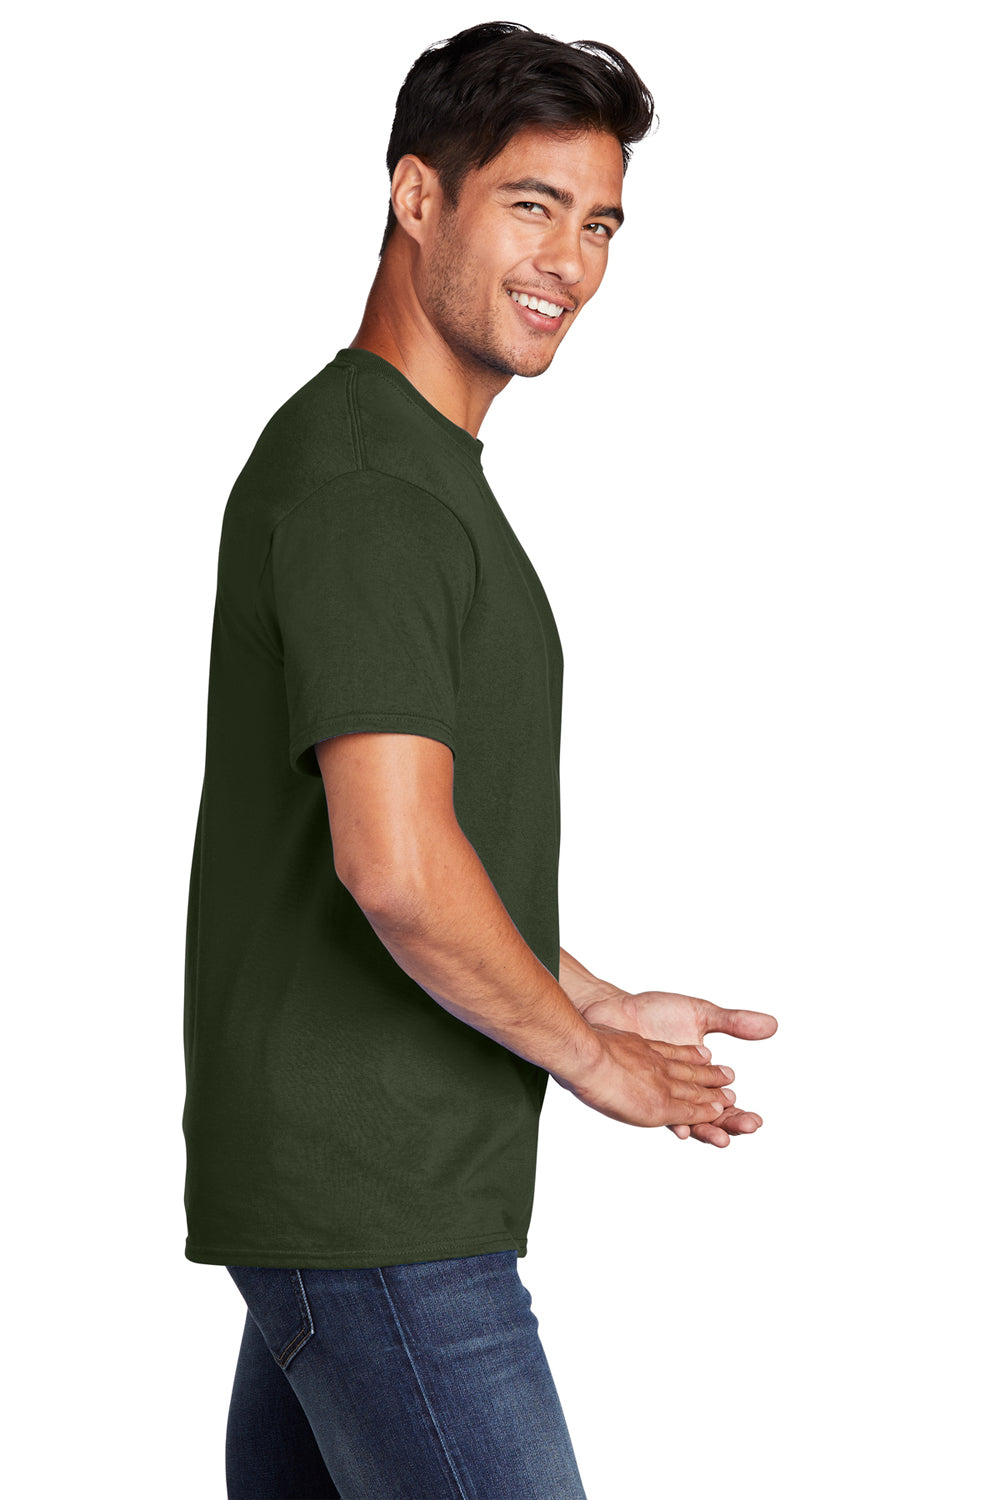 Port & Company PC54/PC54T Mens Core Short Sleeve Crewneck T-Shirt Olive Drab Green Side